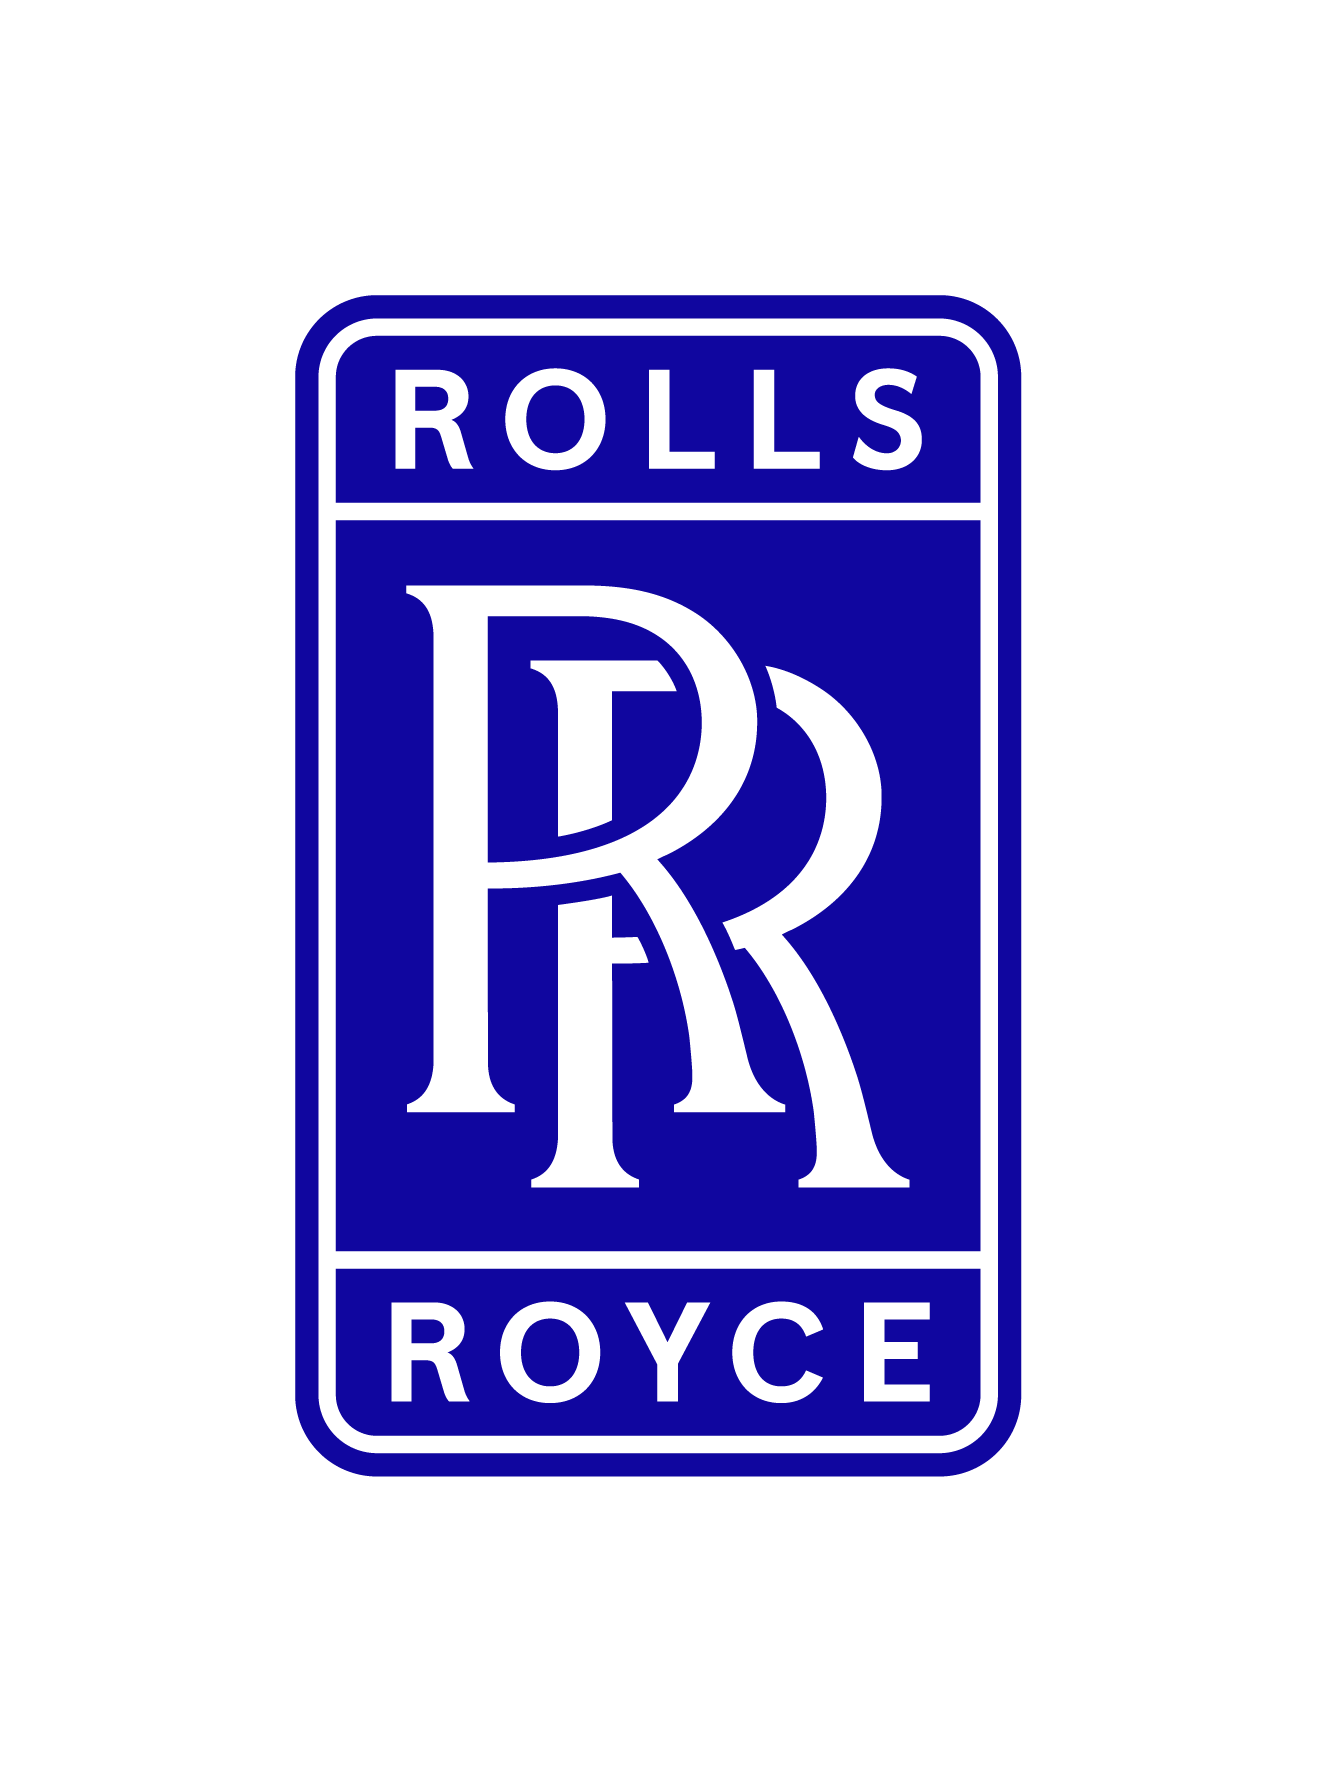 Rolls Royce eBadge RGB